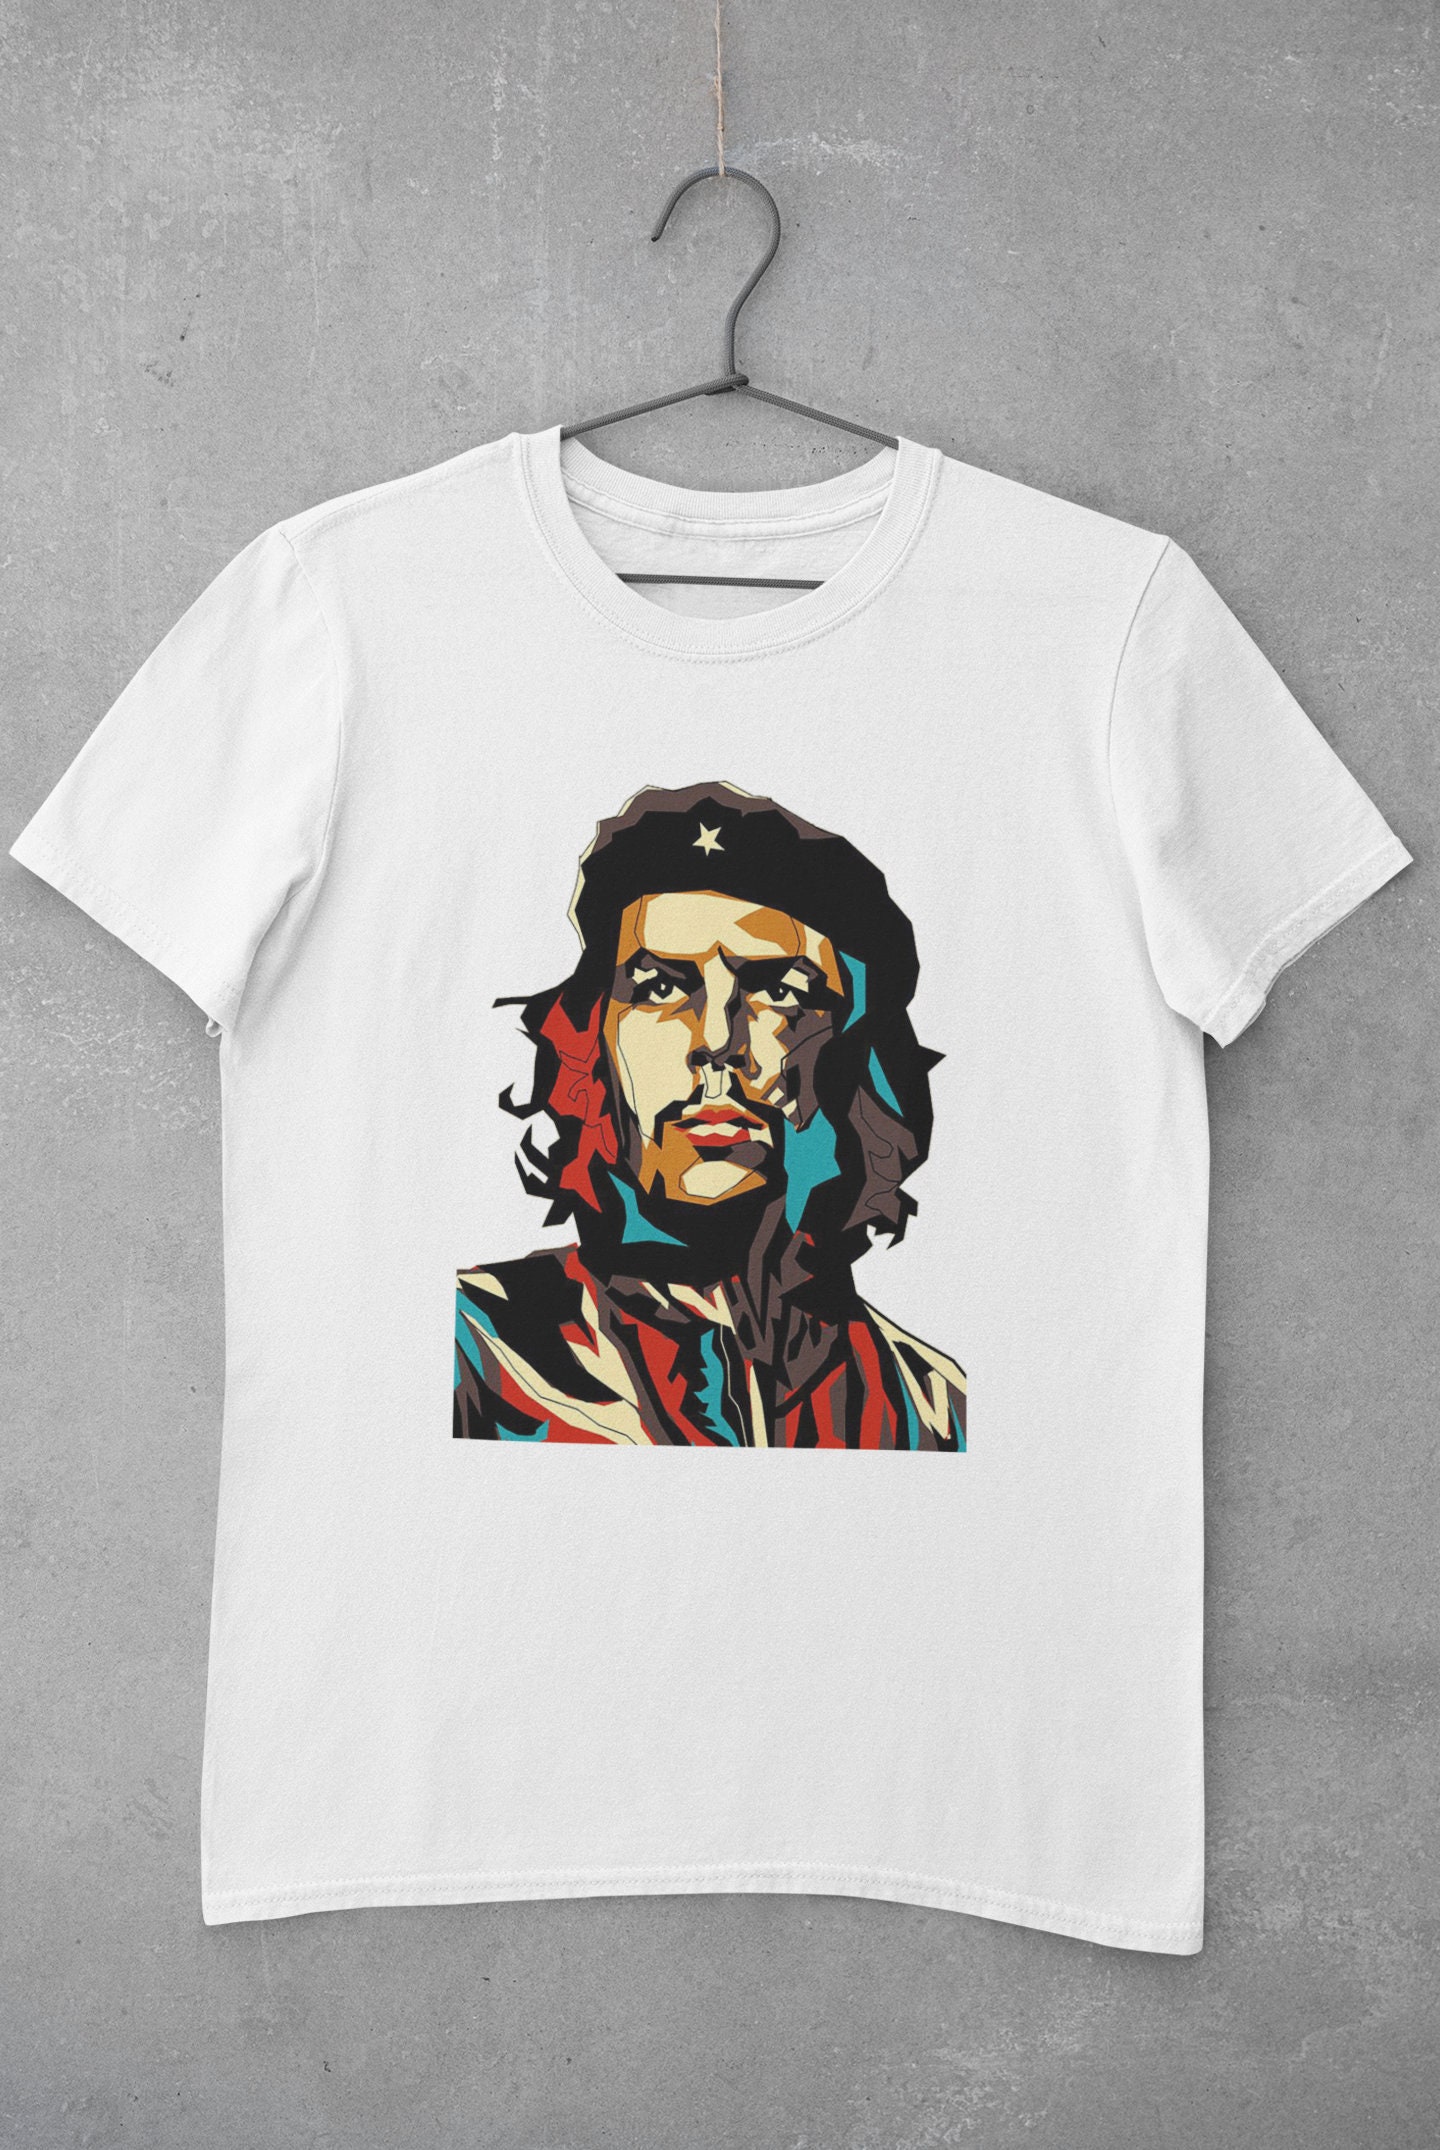 Che Guevara T Shirt Ernesto Che Guevara T-Shirt Revolution Che,Ernesto Che  Guevara T-Shirt Revolution Che, unisex shirt, dolce tshirt